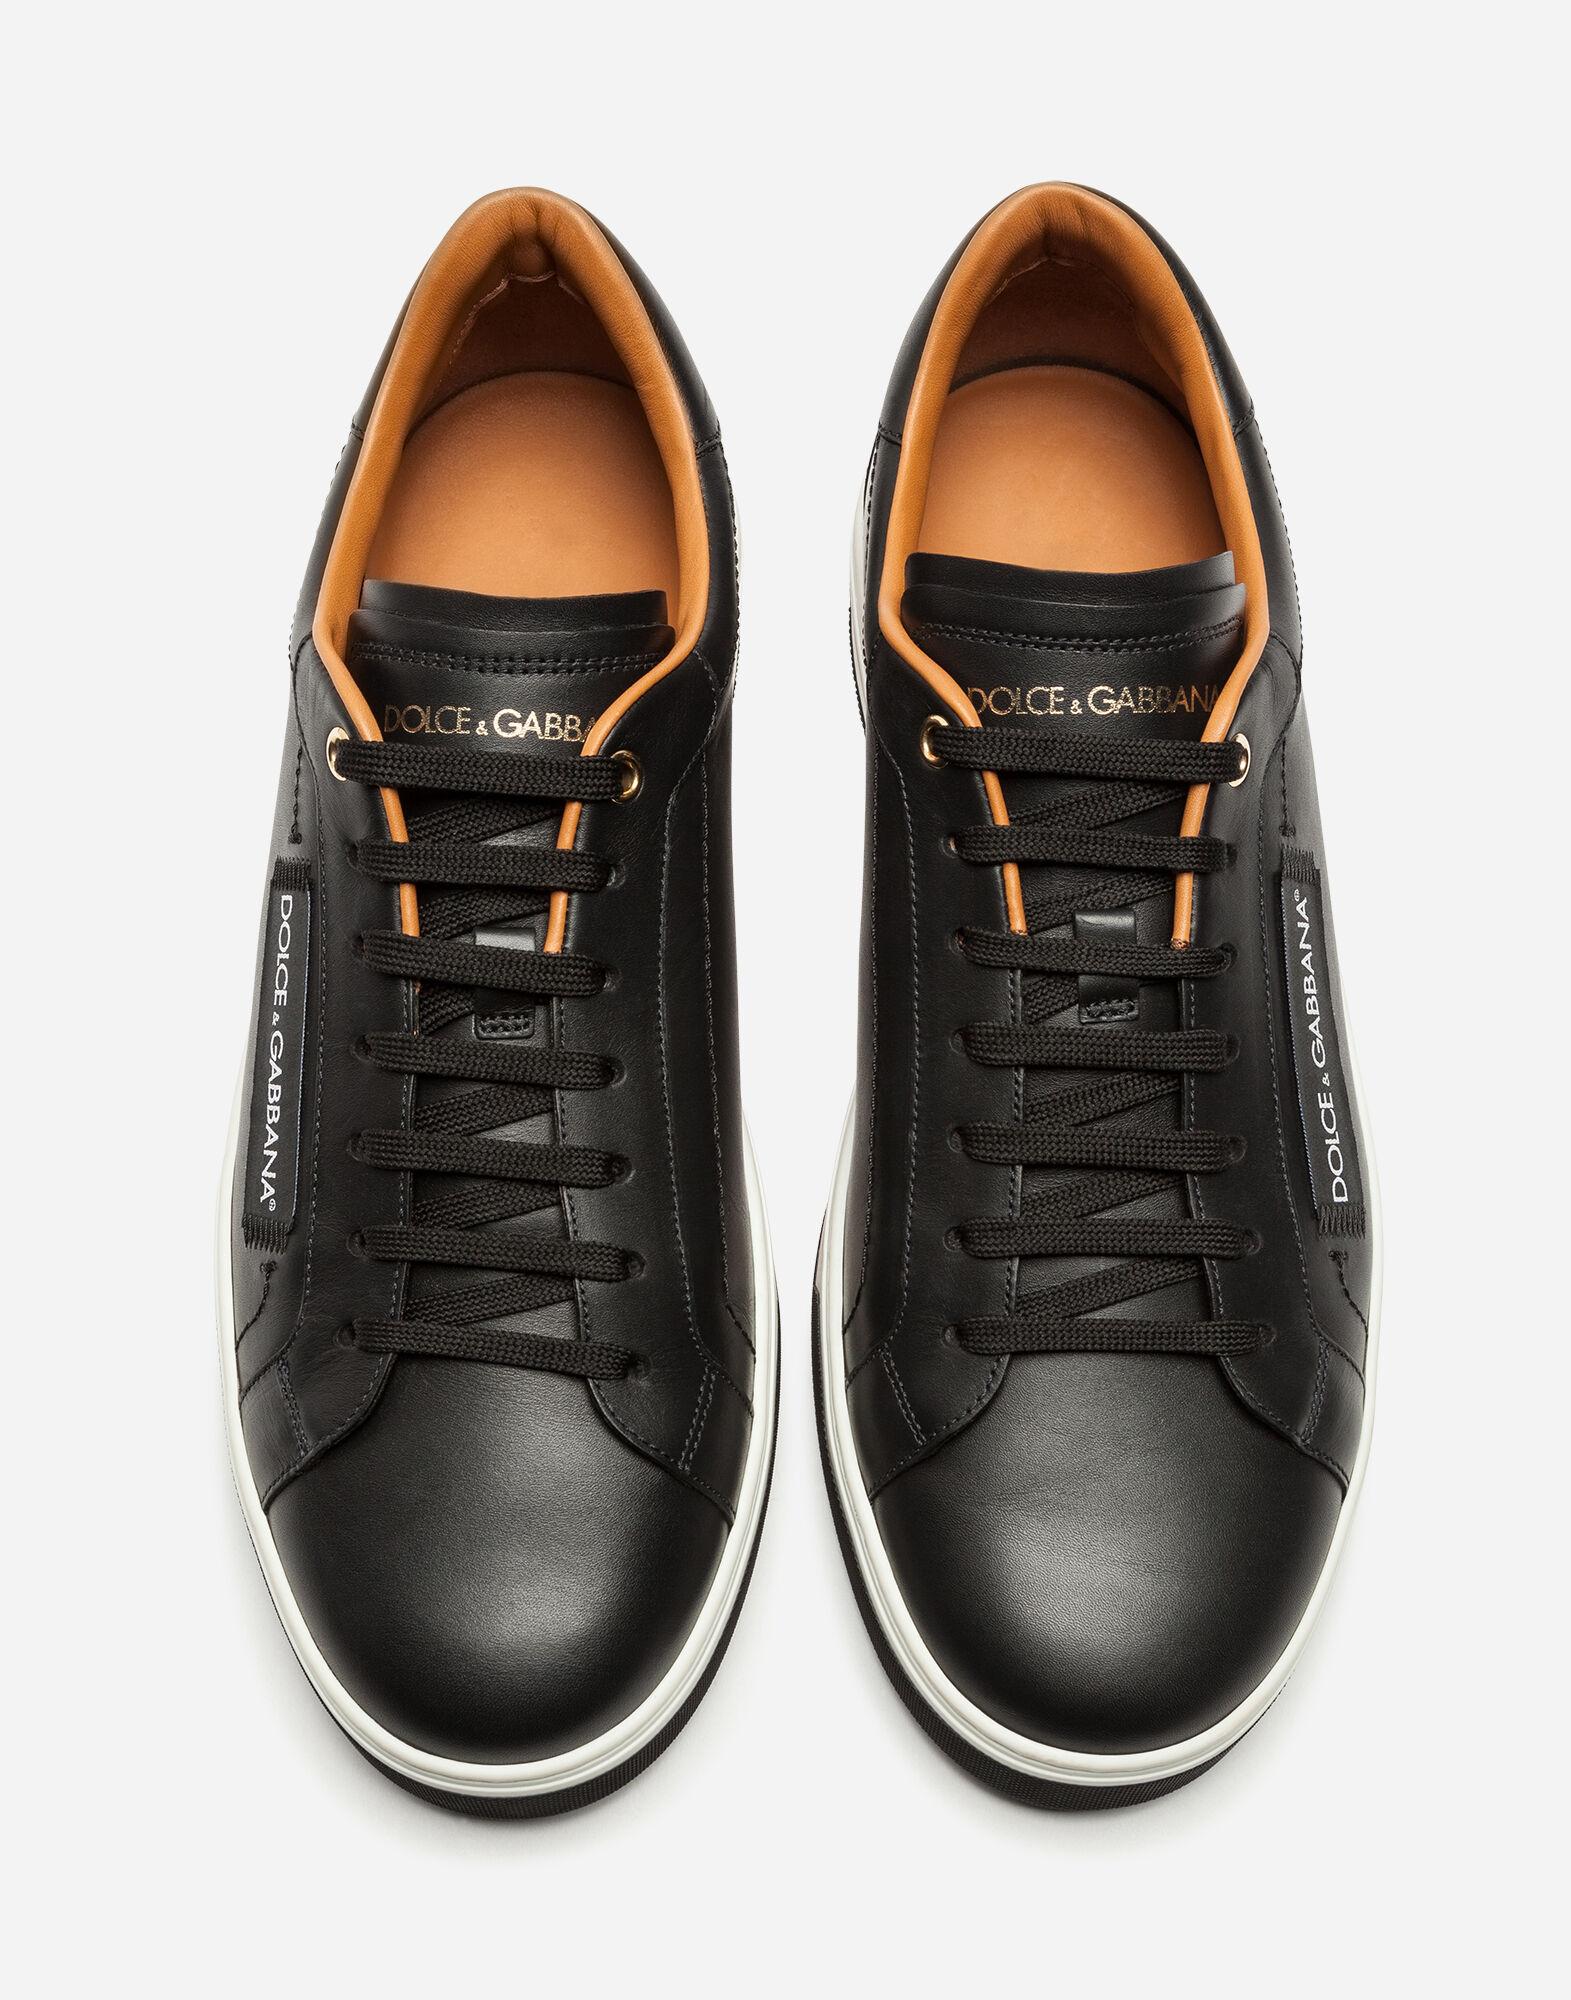 Dolce & Gabbana Leather Roma Sneakers In Nappa Calfskin in Black for ...